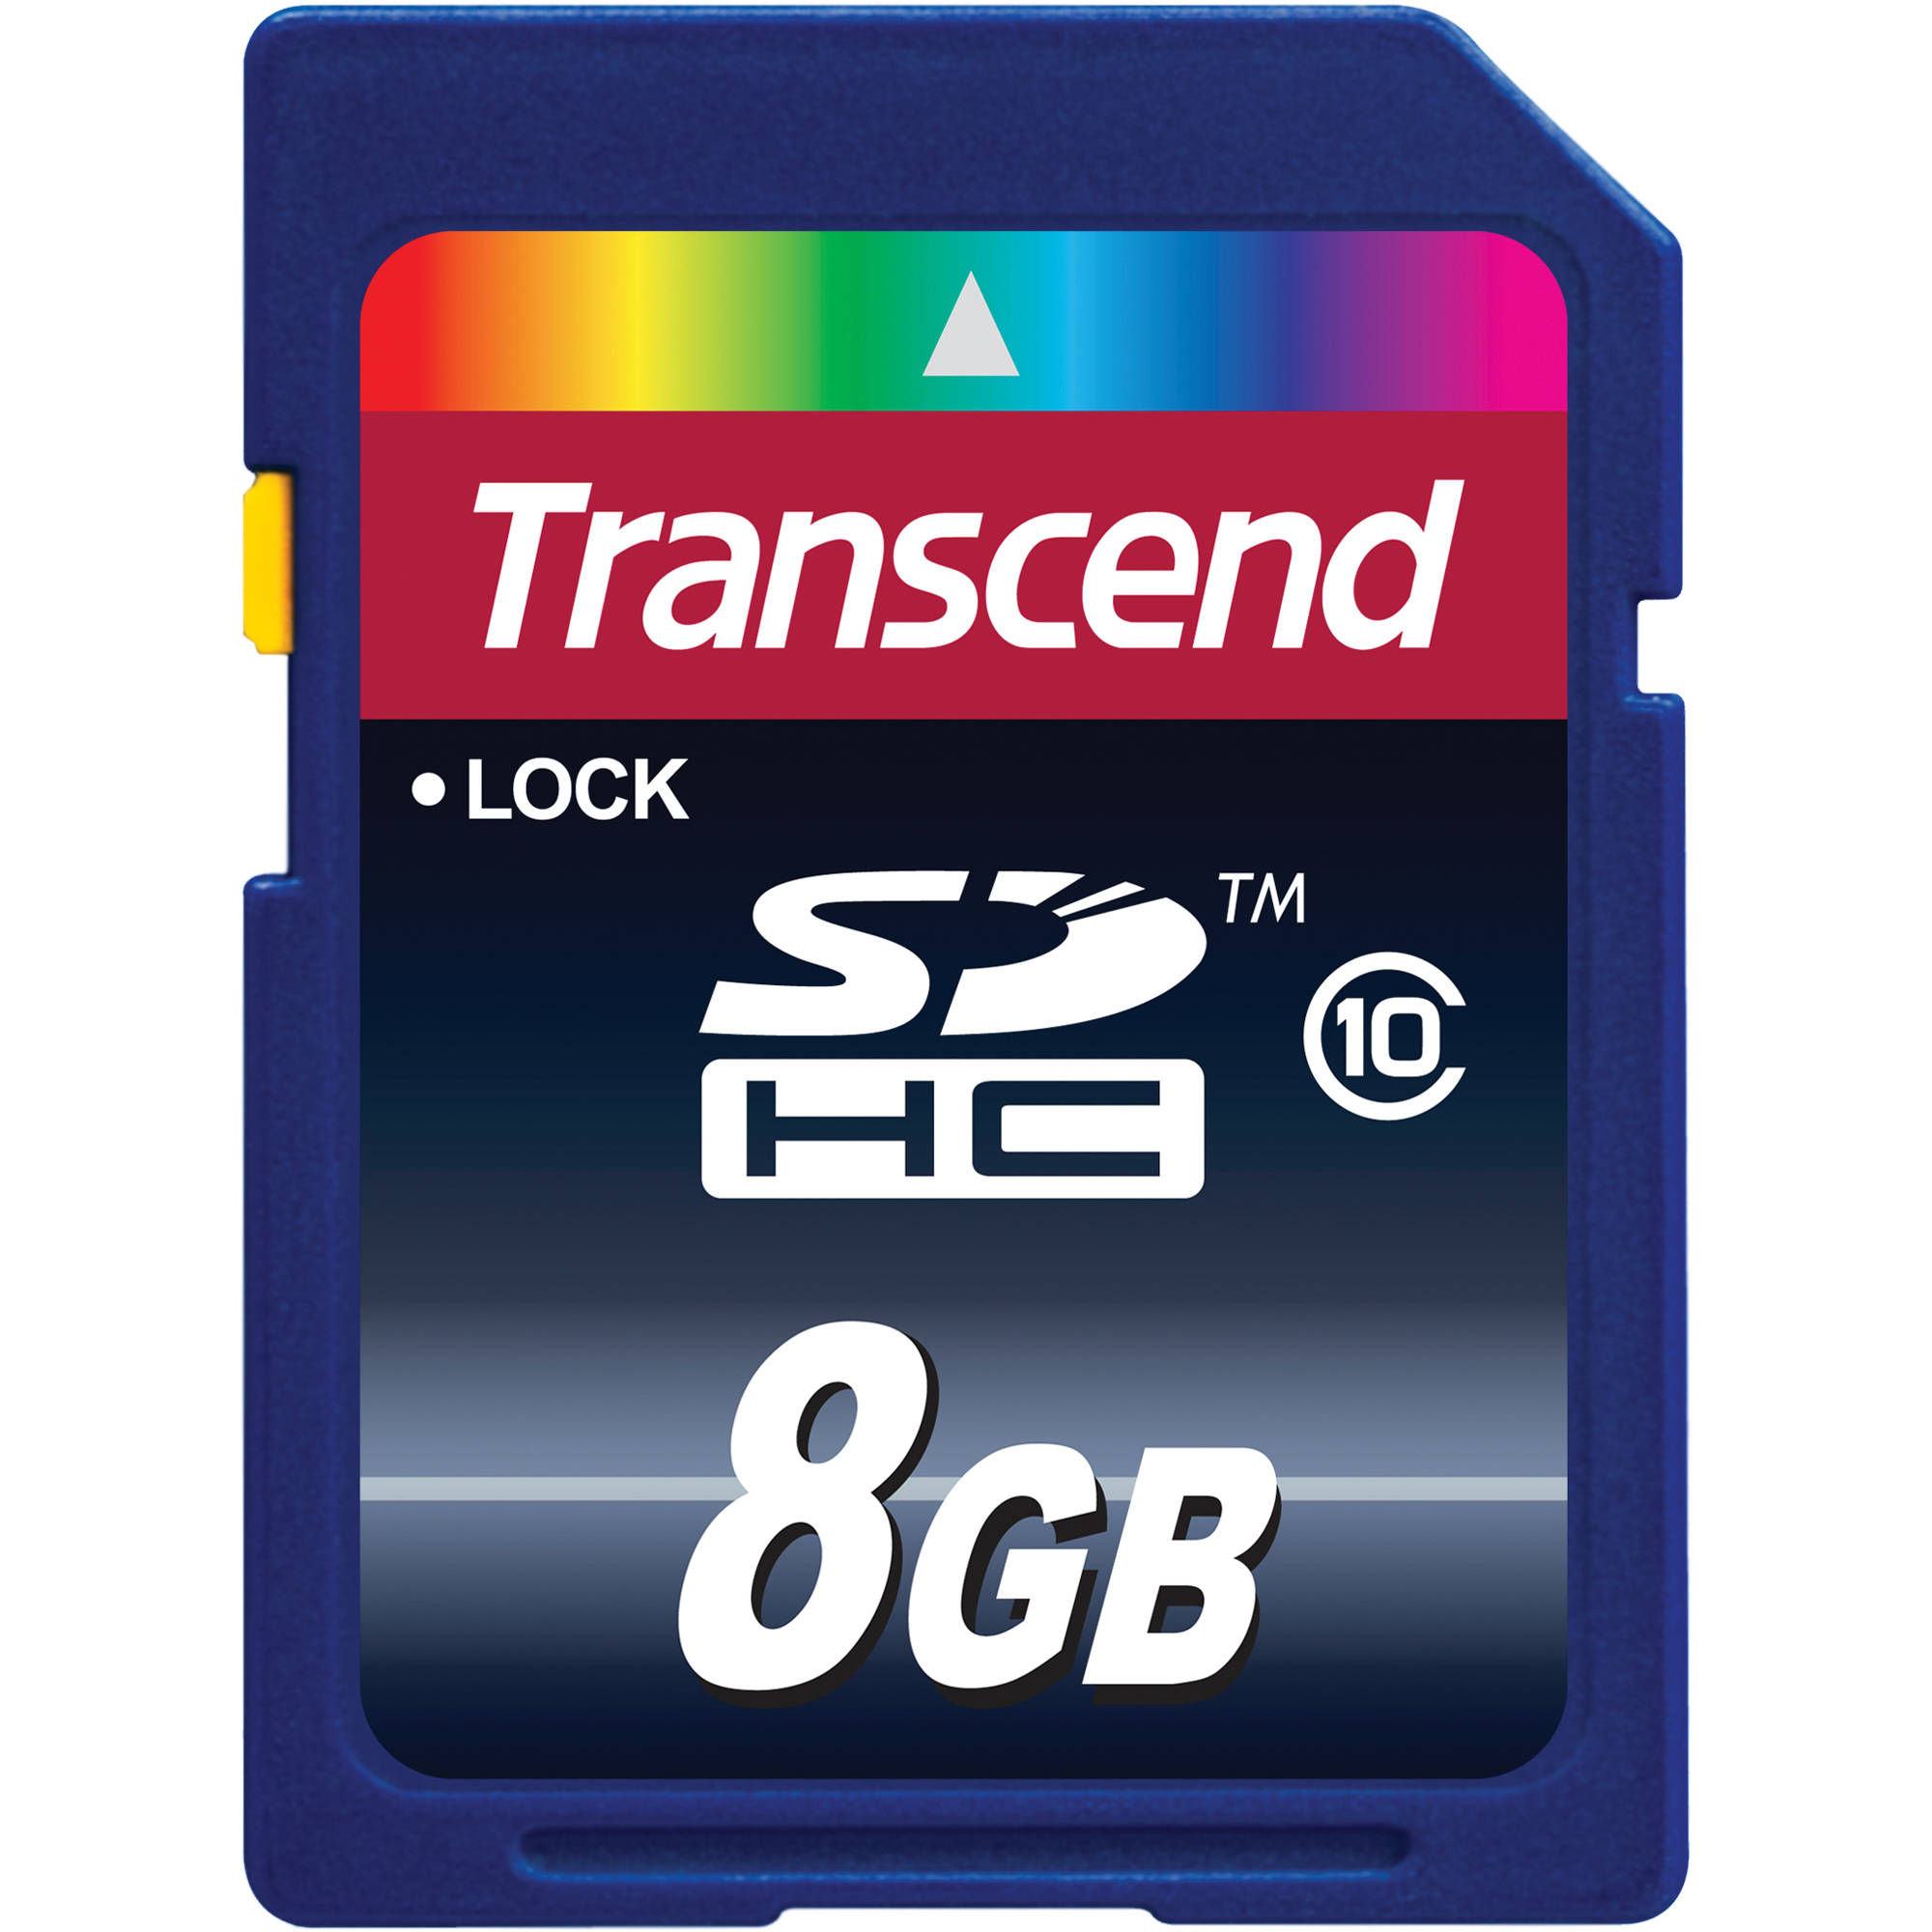 8GB SDHC CLASS 10 TRANSCEND